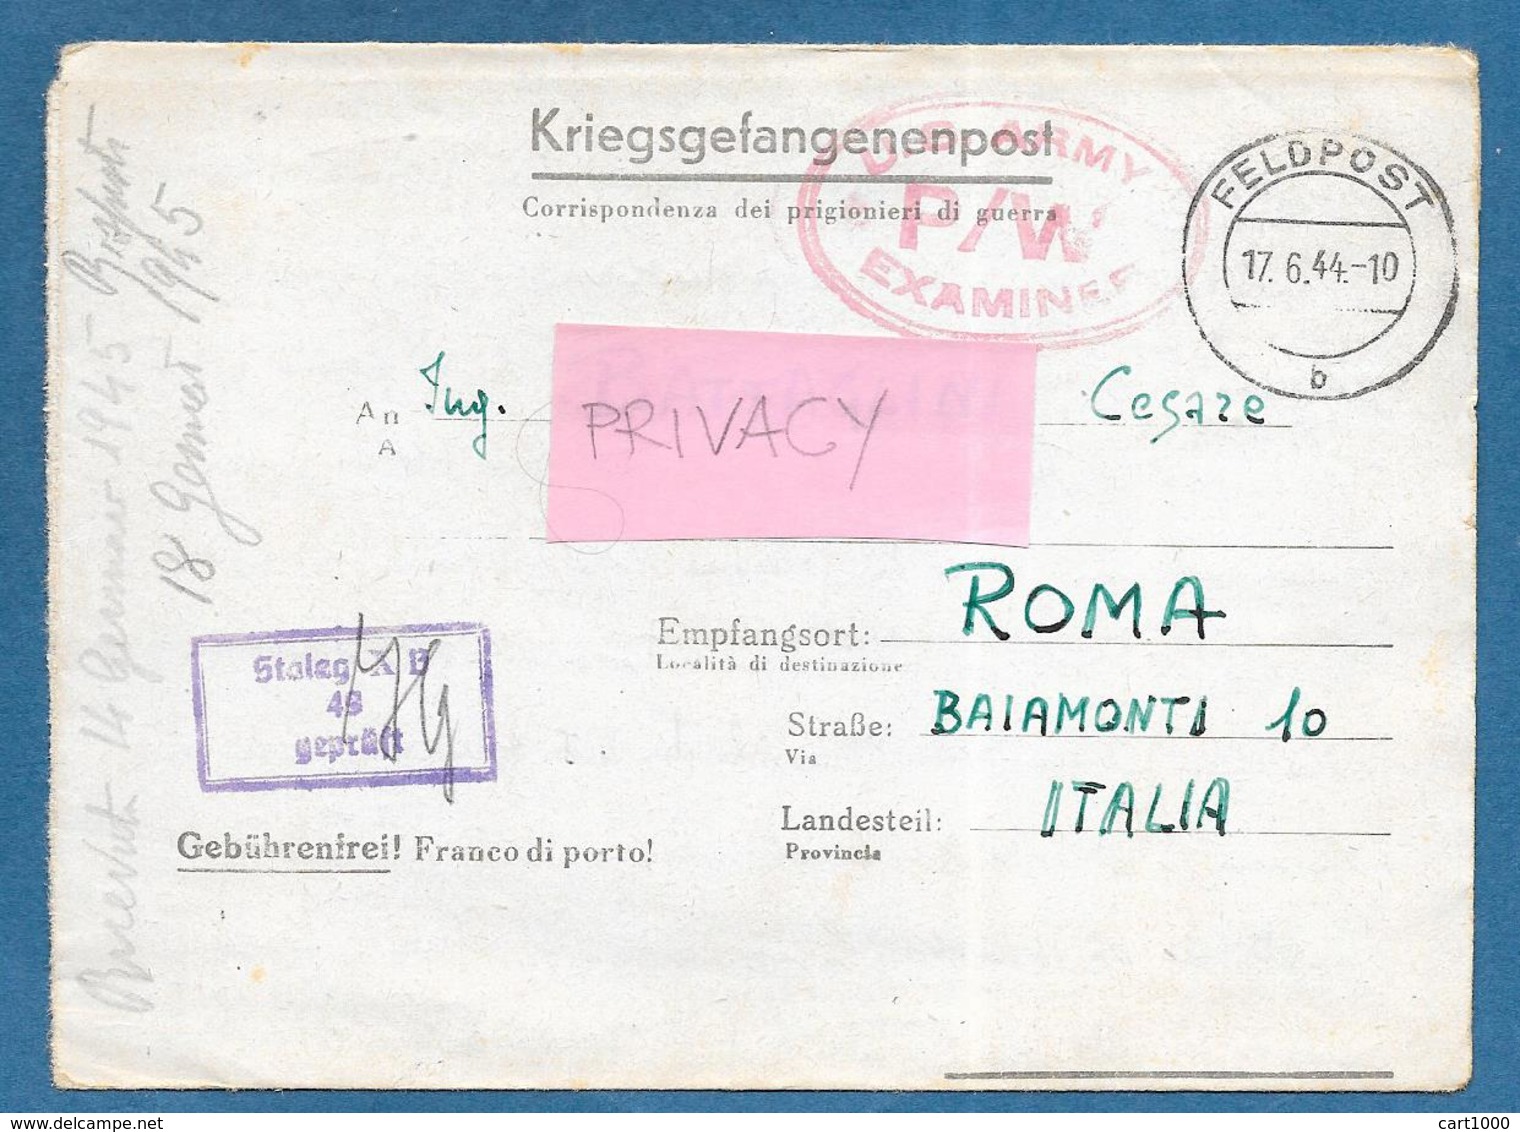 KRIEGSGEFANGENENPOST FELDPOST 1945 ROMA TO GERMANY M. STAMMLAGER X. B. PRISONNER OF WAR U.S. ARMY P/W EXAMINER - Dokumente